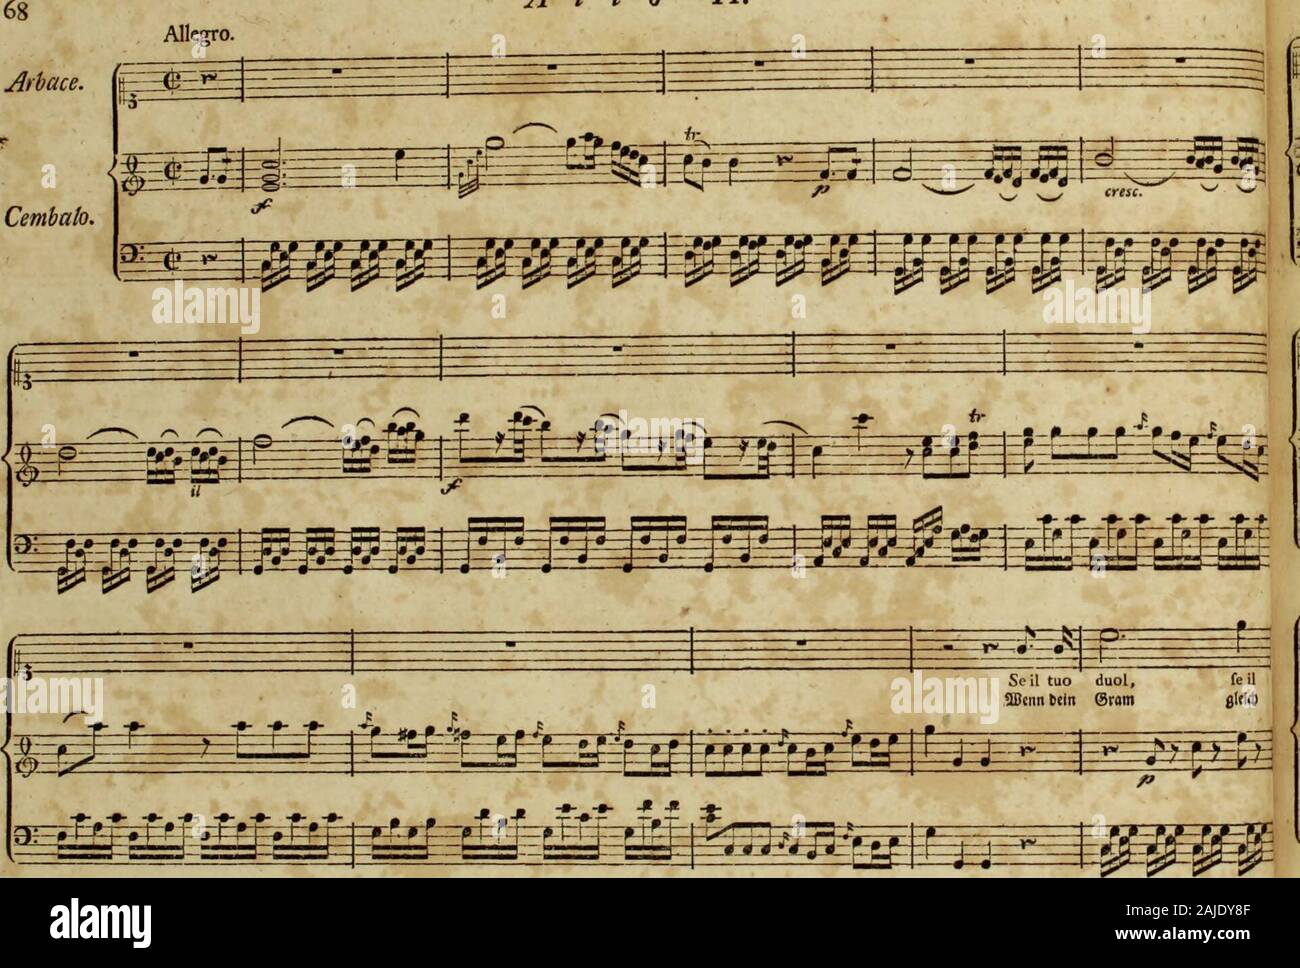 Idomeneo, Rè di Creta : Opera seria in tre Atti (K.366) = Indomeneus König von Creta : ernsthafte Oper in drey Aufzügen im Klavierauszuge . Ts ^======^——^—=^==:^^^=  j , ^—1   j- I^^B^^Si^^fe^^^^^ *ES£:!i ^^^iftipi^r^^isii R o A t t o II.. S rp r-ggrlr ^*5t ^E^S£ mio me/ &lt;ie - C - o sen vo - Us ncn SDunfctcn ta. I;in eil r^ggs=^gg=mm^±&&£ se - ro del te avi tern ^^g^^—p-g^^ ^=«t ^bp C; f? ^JLij4^=ffpg^ BSE Stock Photo